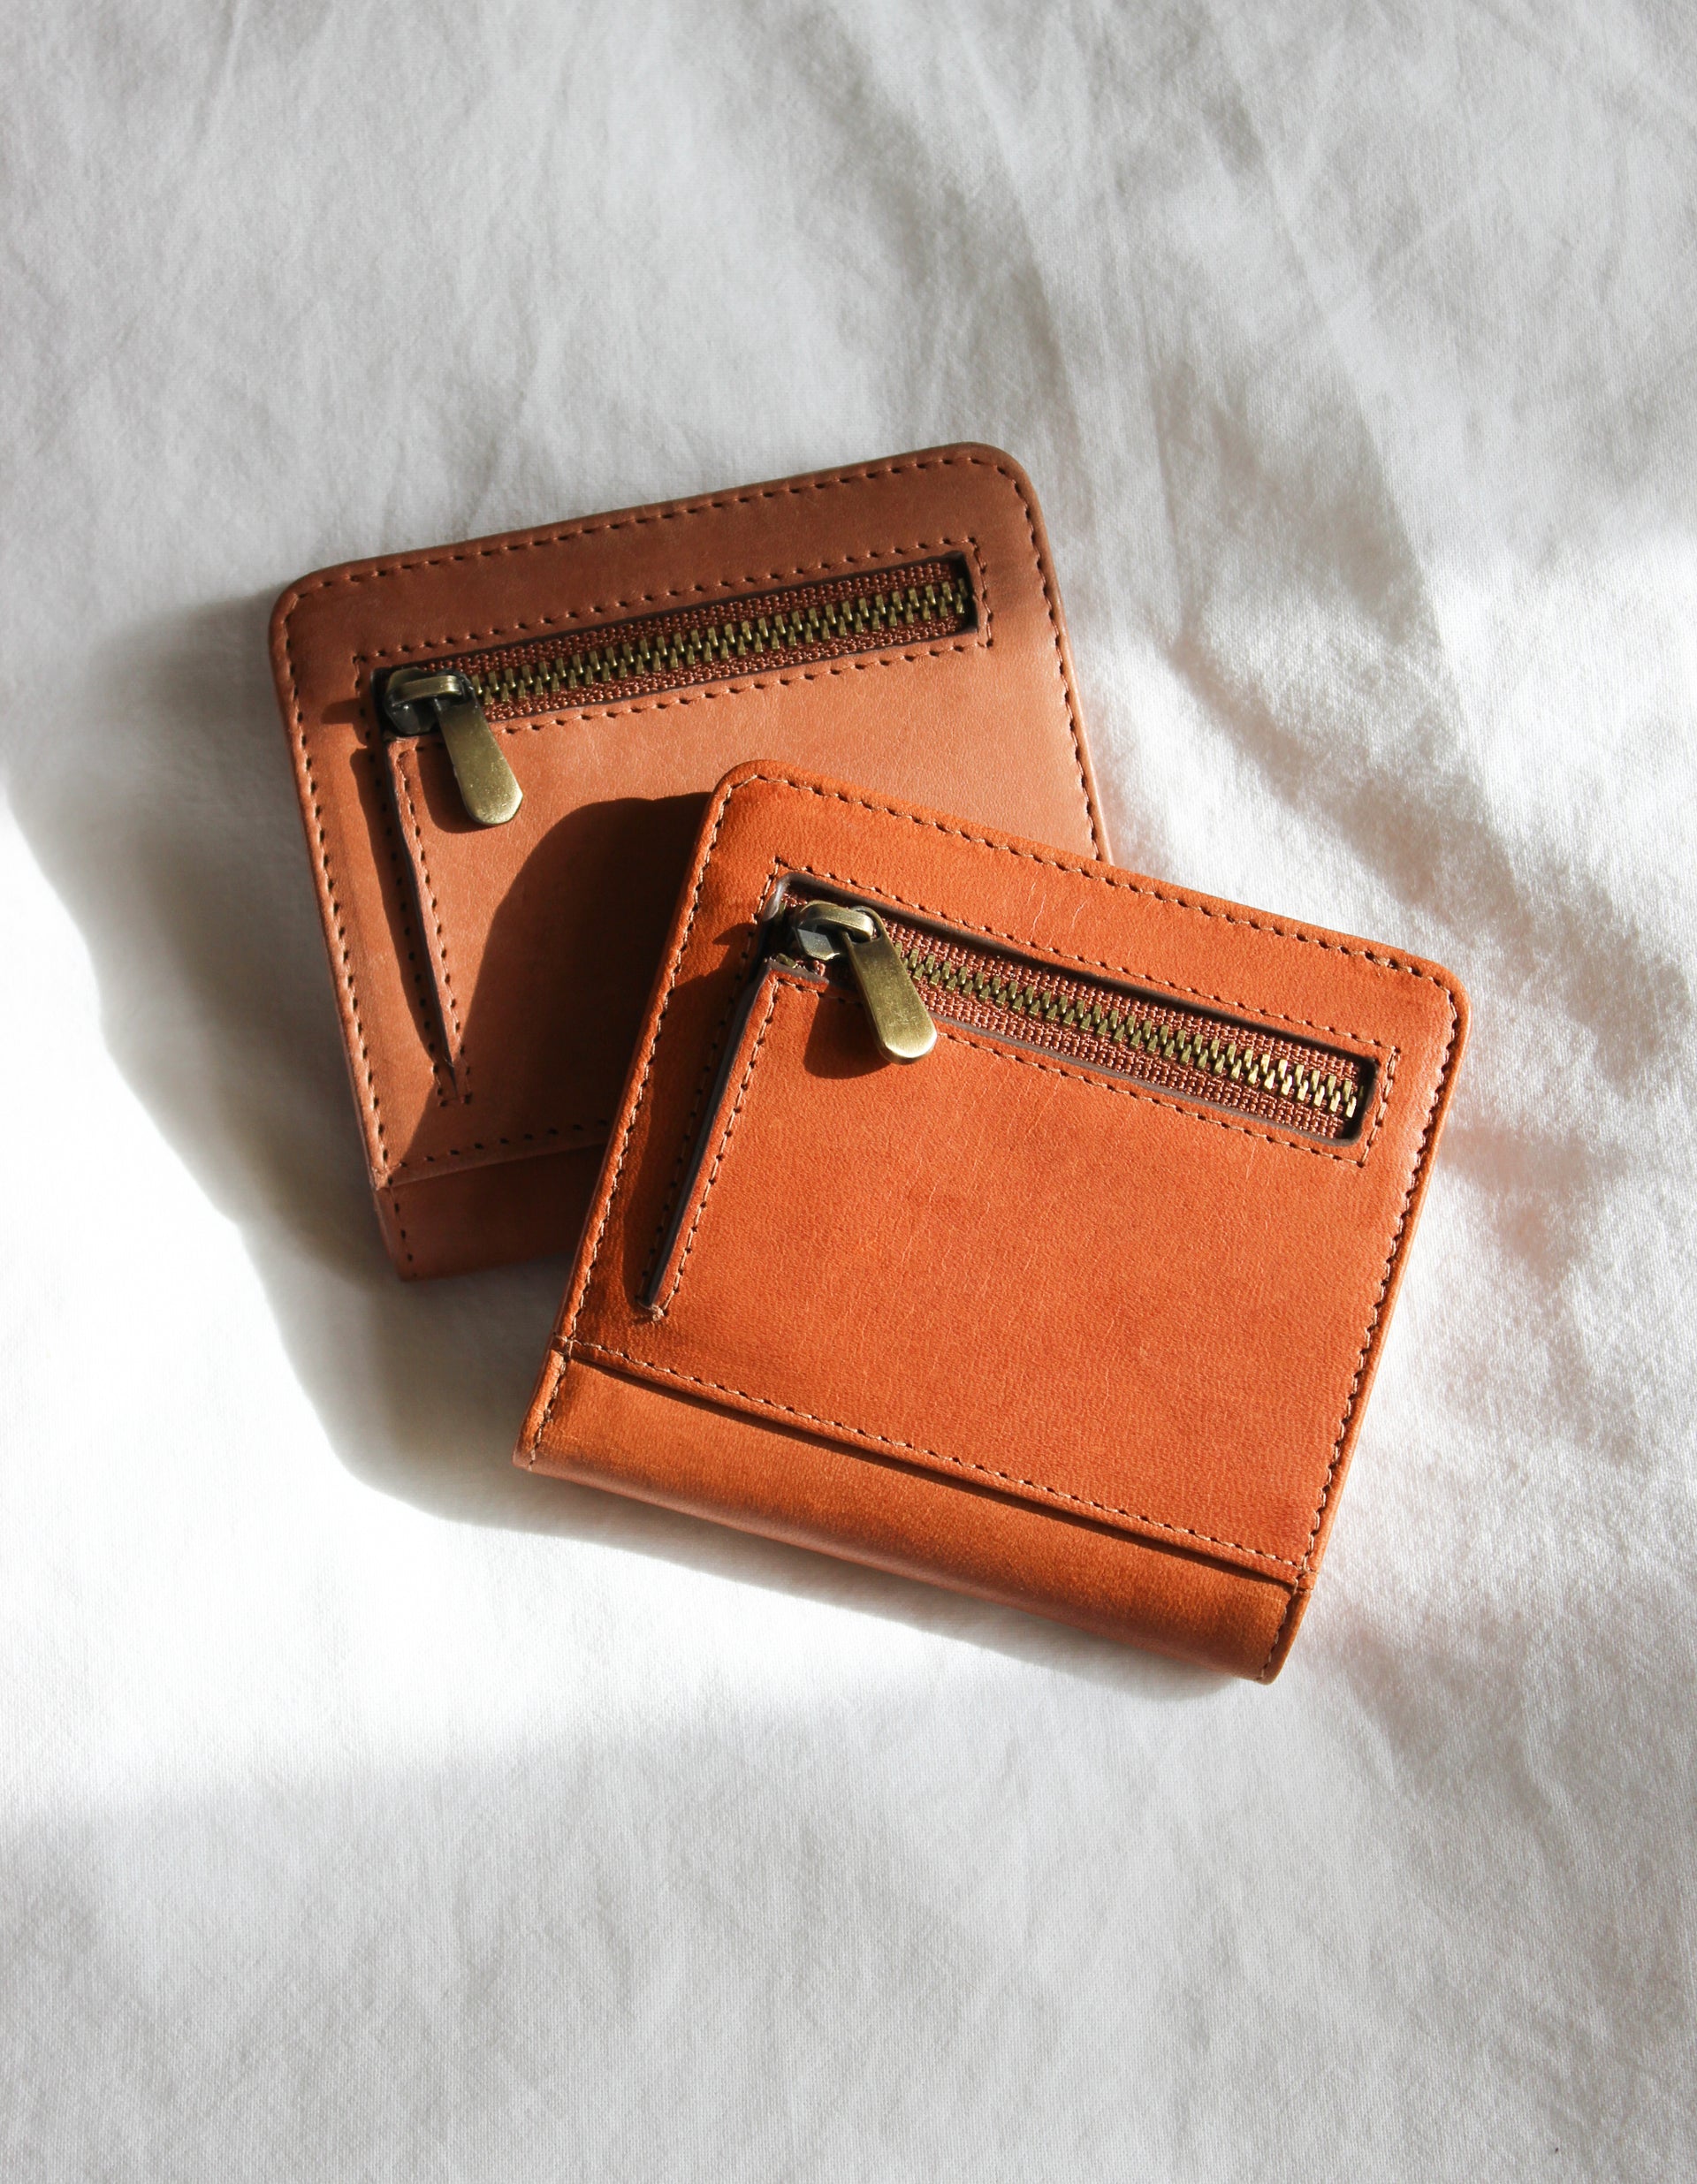 Alex's Fold-over Wallet Classic Leather cognac colour. Medium size, square shaped wallet, lifestyle image